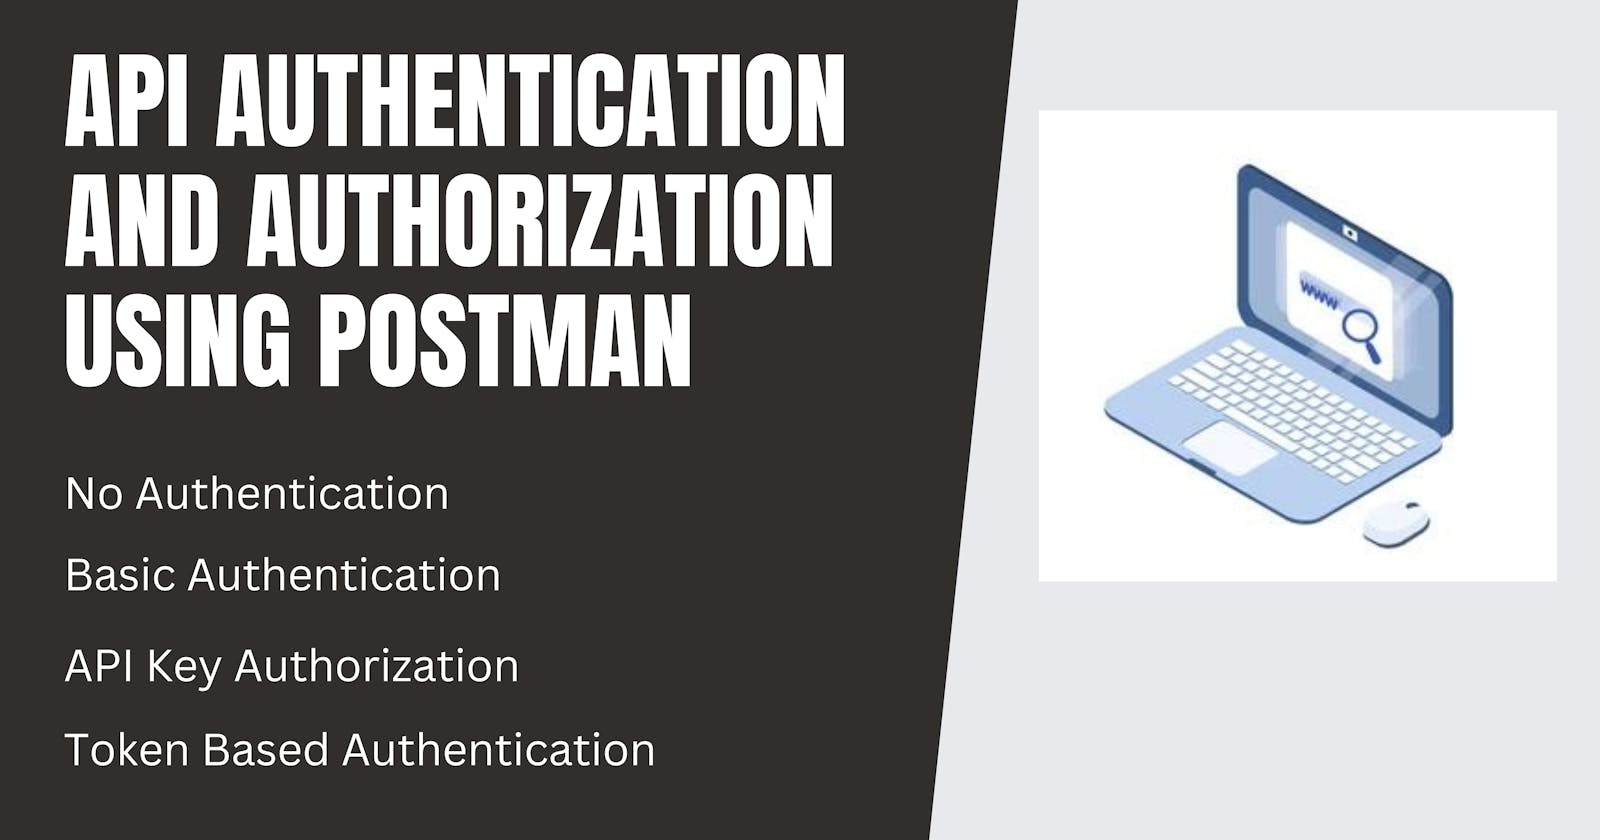 API Authentication and Authorization using Postman